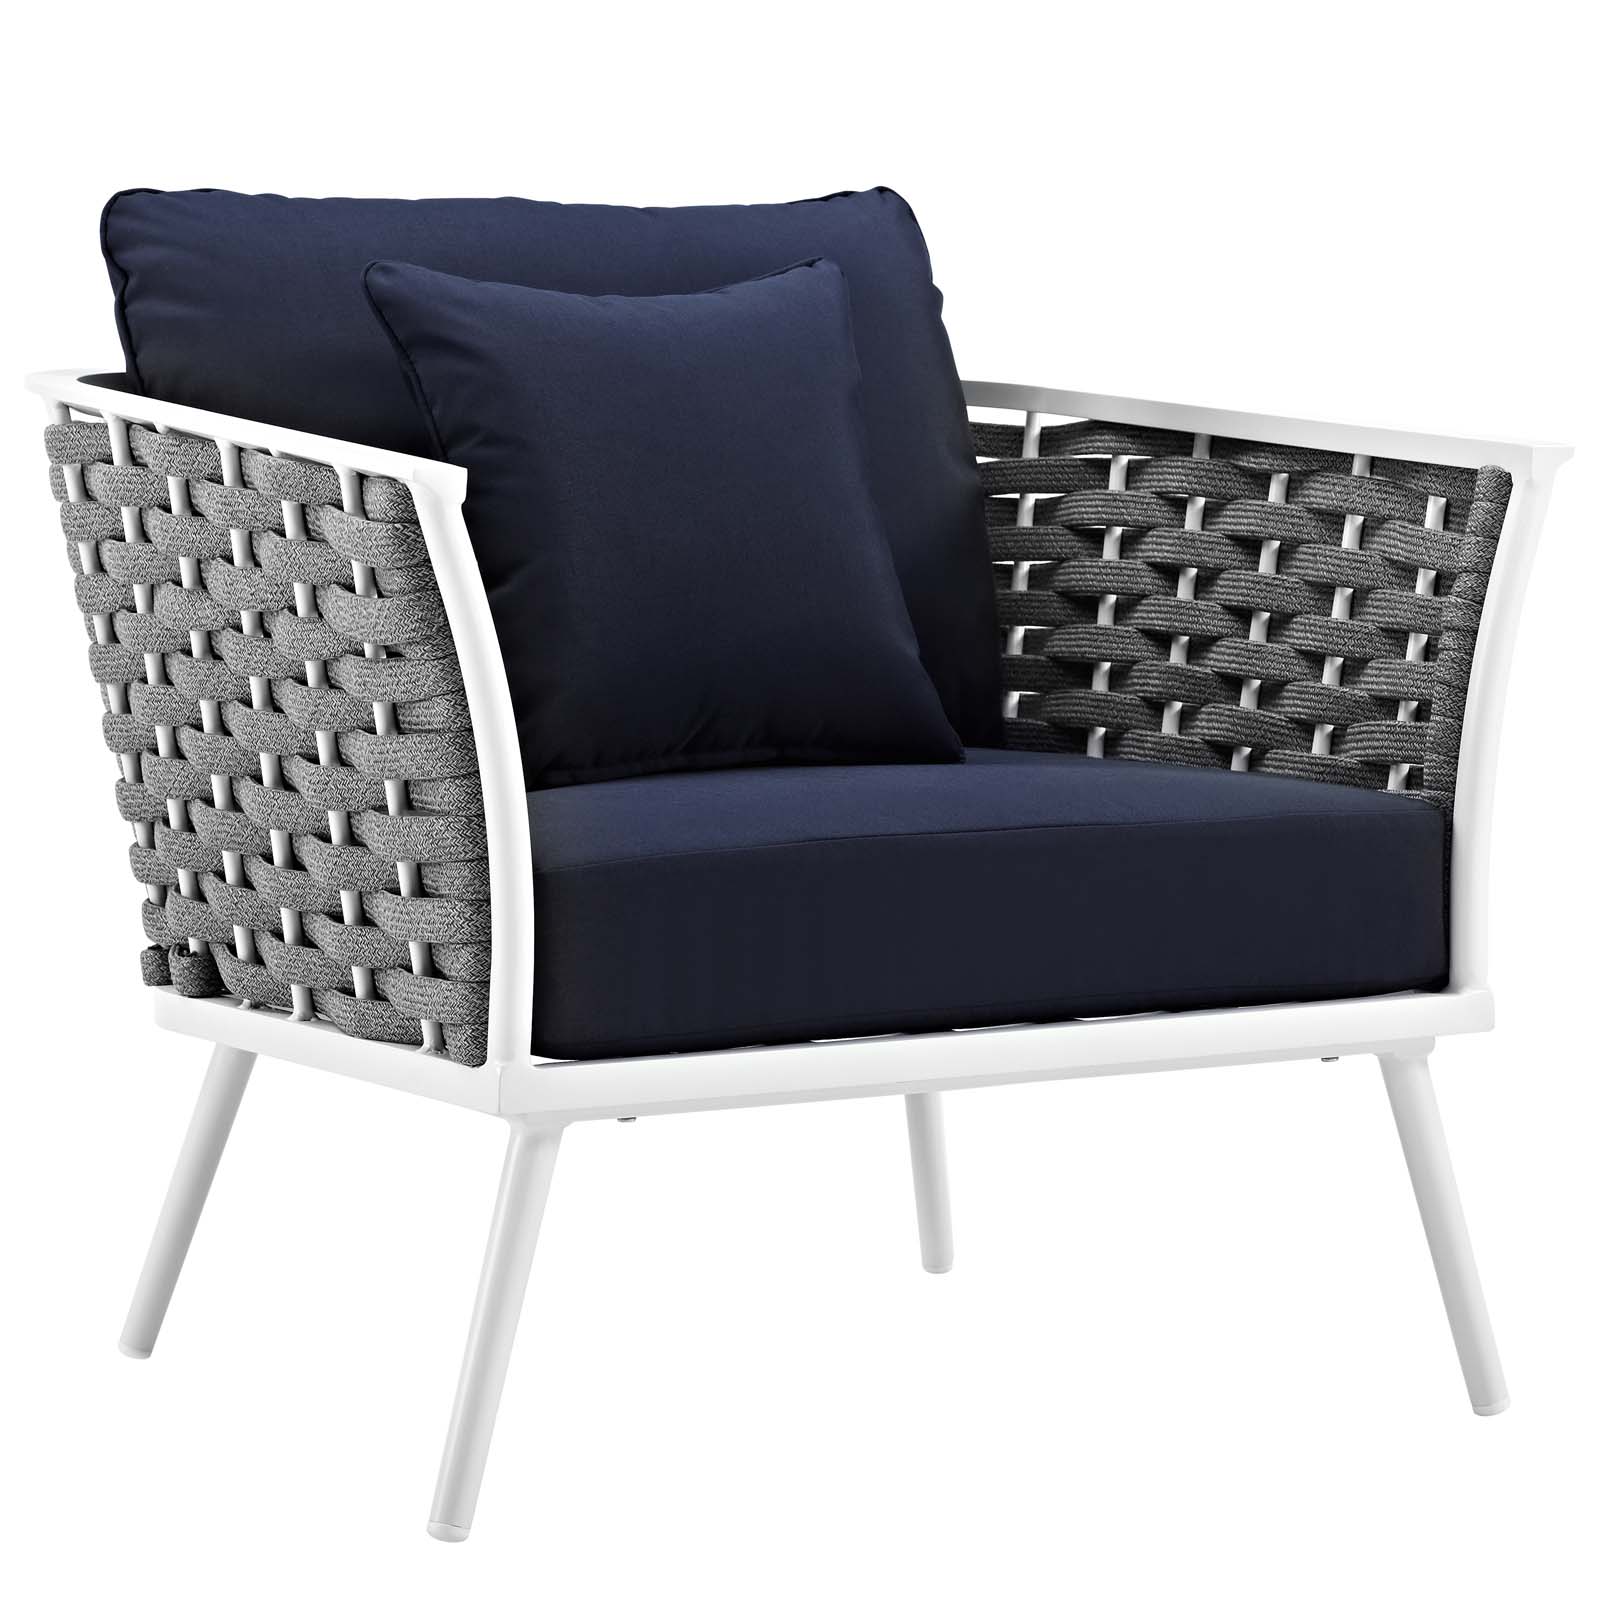 Modern Contemporary Urban Design Outdoor Patio Balcony Garden Furniture Lounge Chair and Sofa Set, Fabric Aluminium, White Navy - image 4 of 8